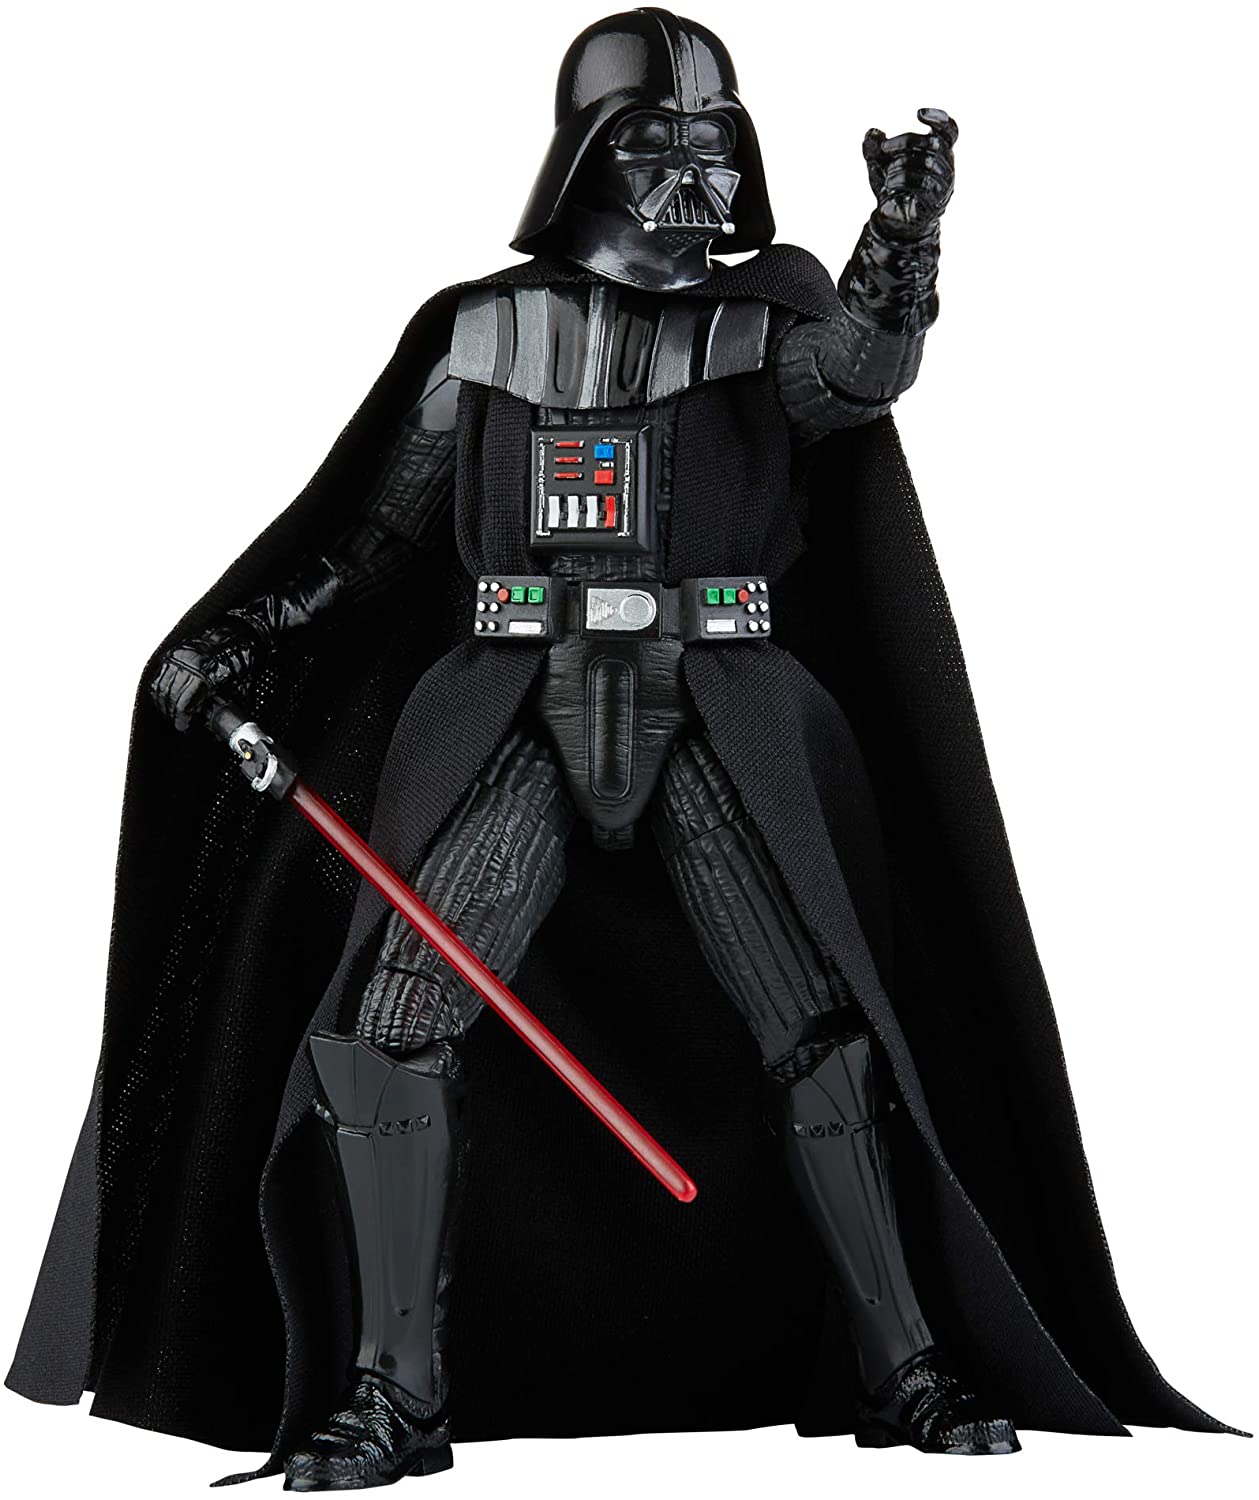 Star Wars The Black Series Darth Vader #01 6-Inch Action Figure